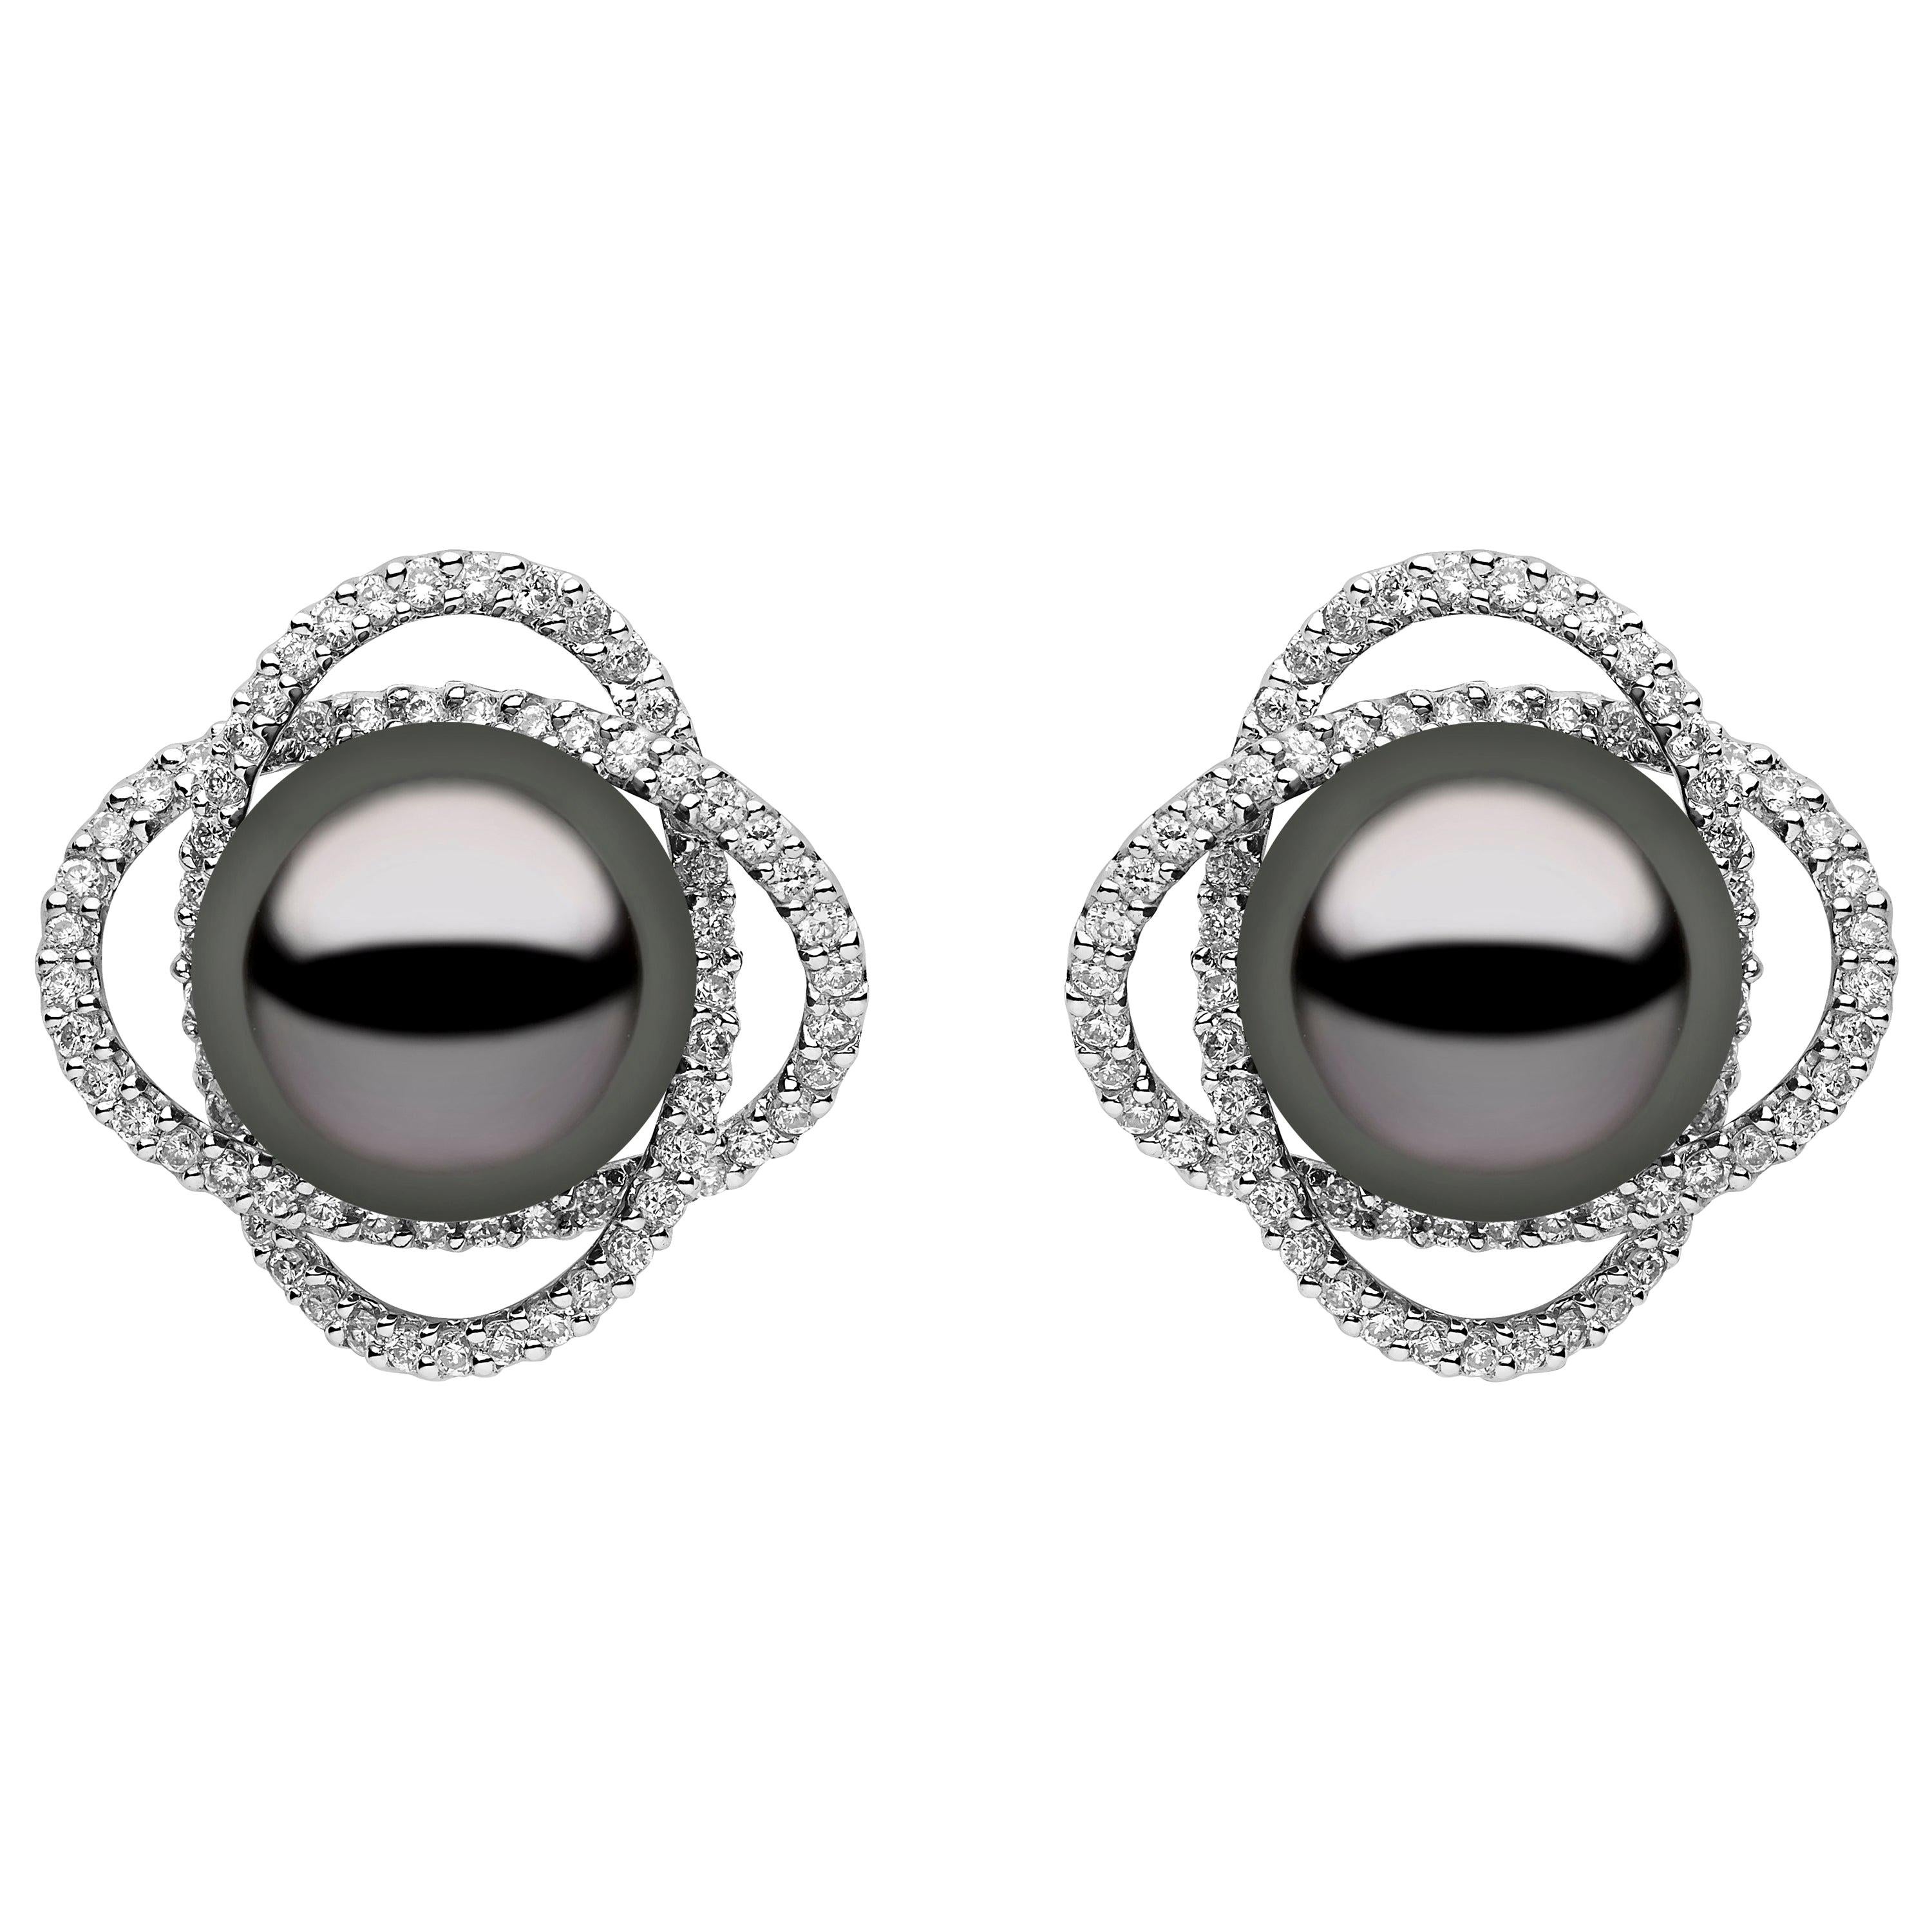 Yoko London Tahitian Pearl and Diamond Earrings, in 18 Karat White Gold